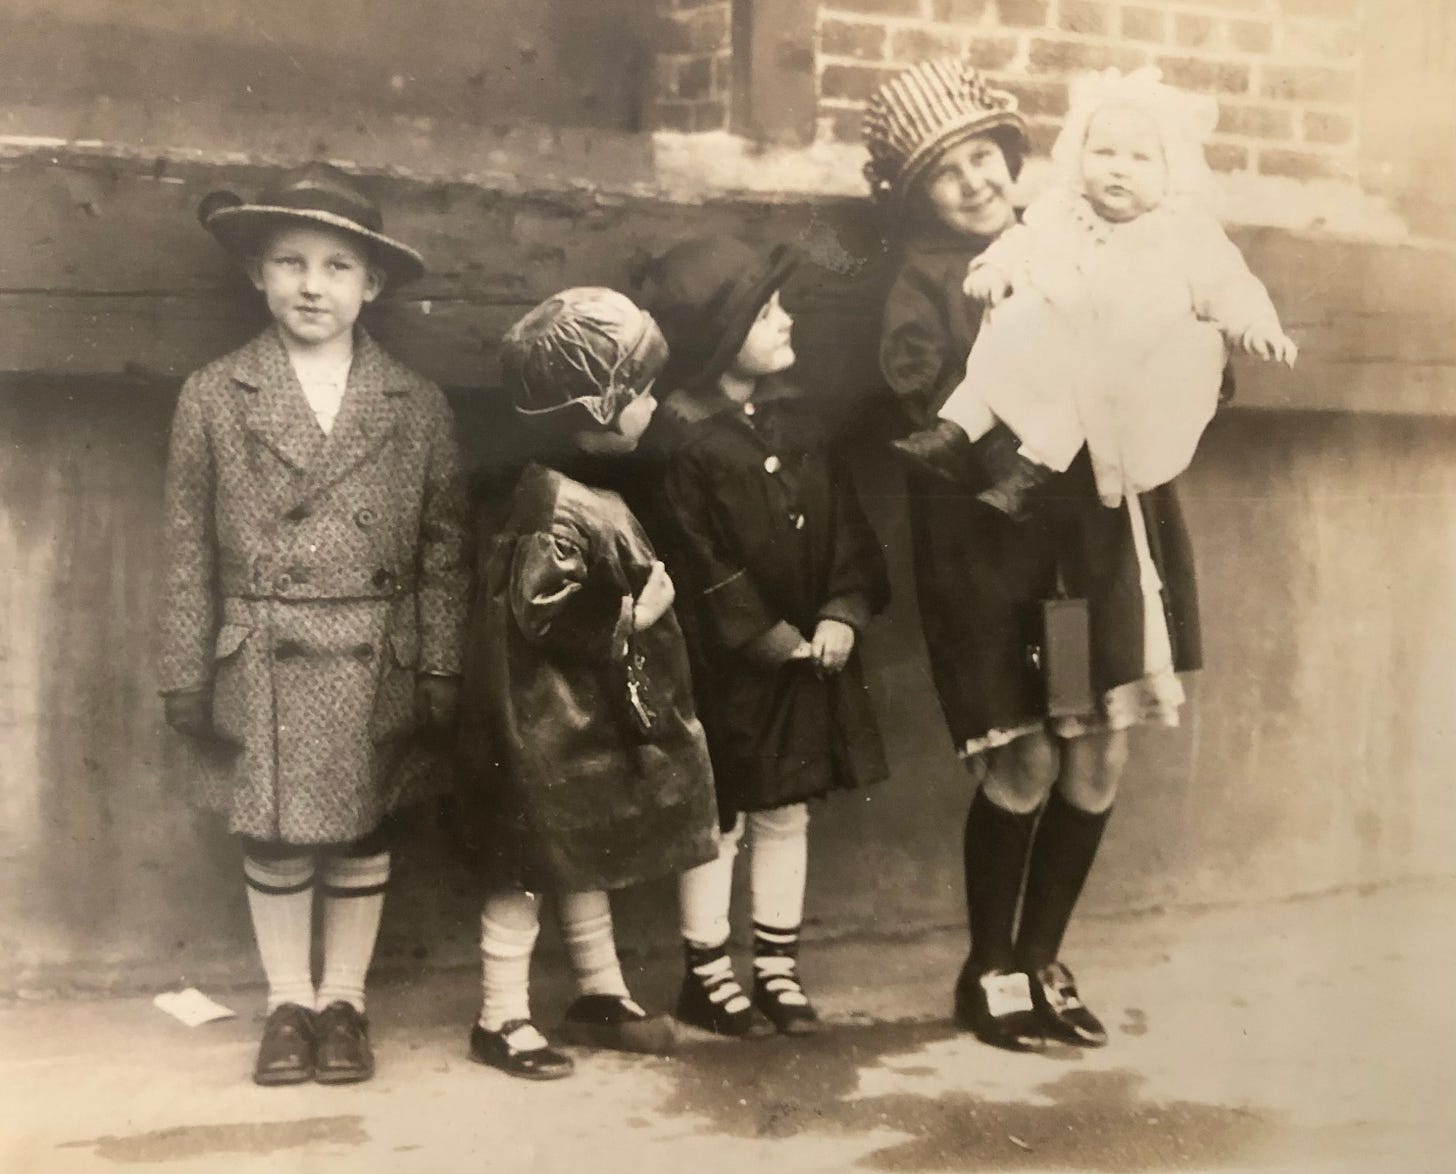 Children in the 1920s